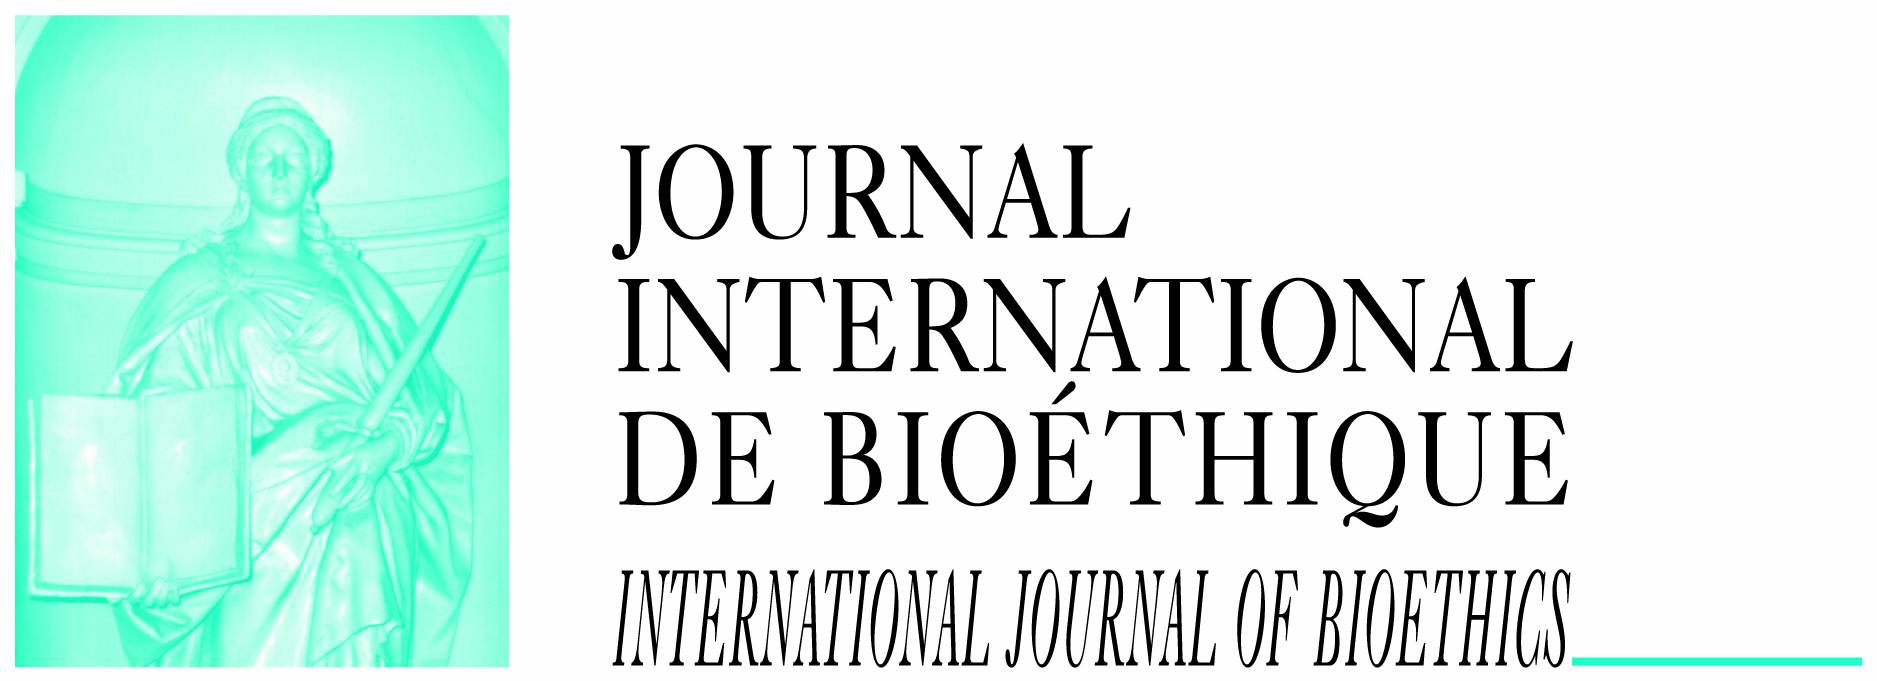 Journal International de Biothique